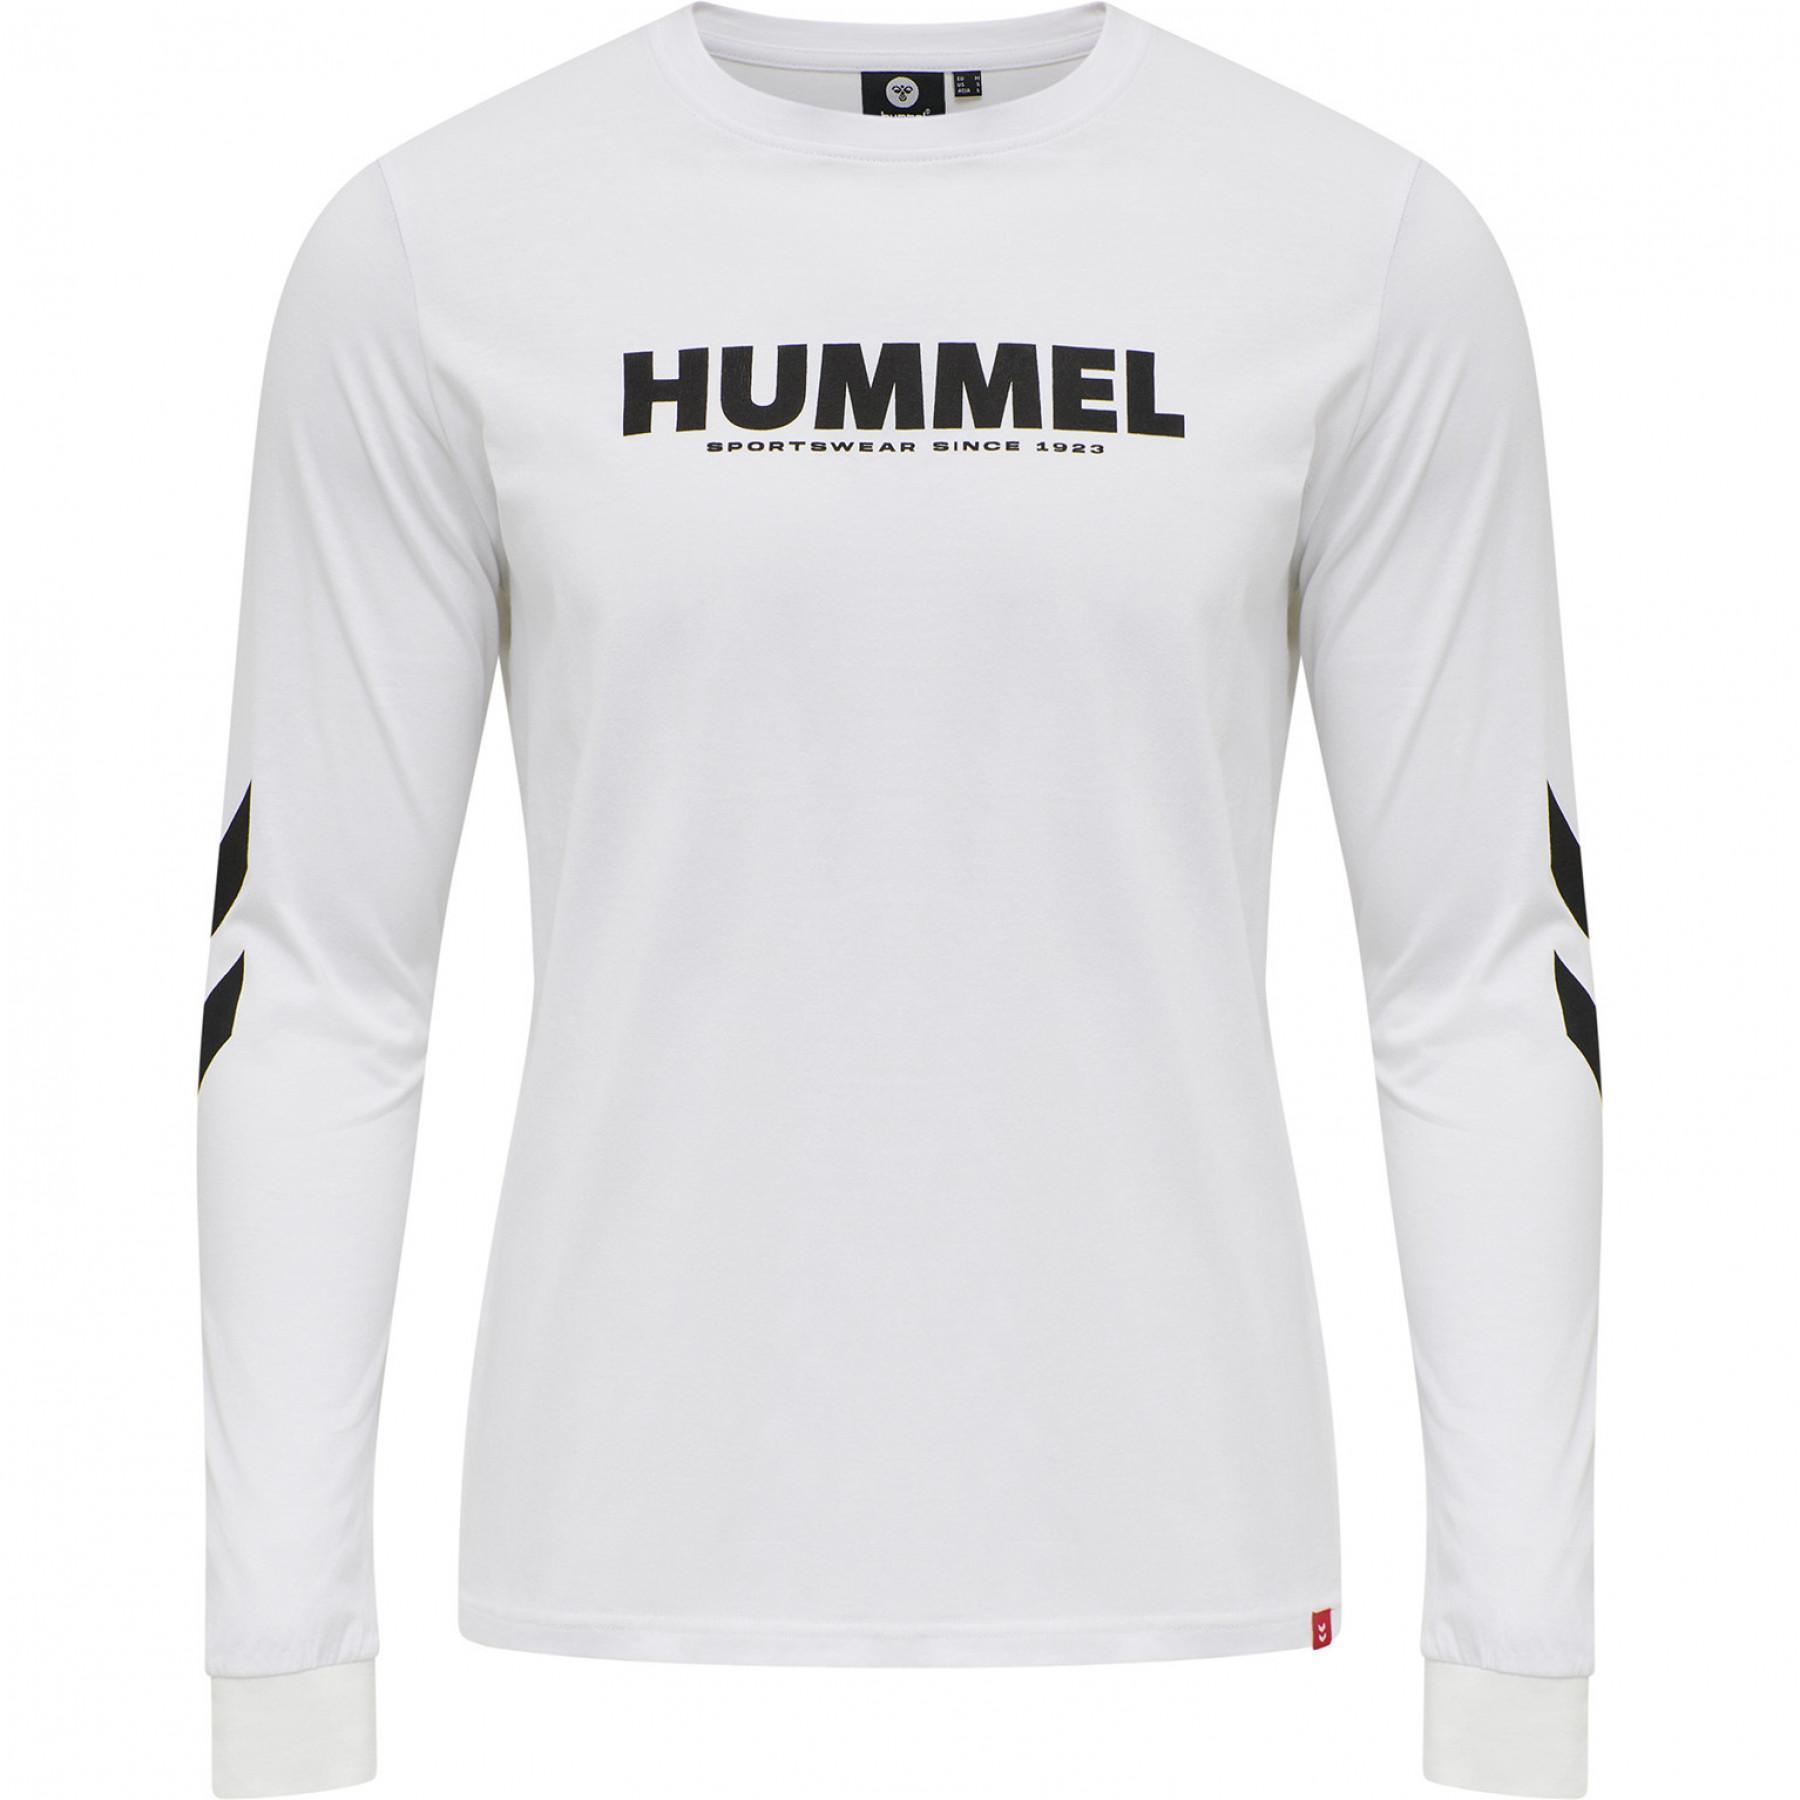 T-shirt manches longues Hummel hmlLEGACY